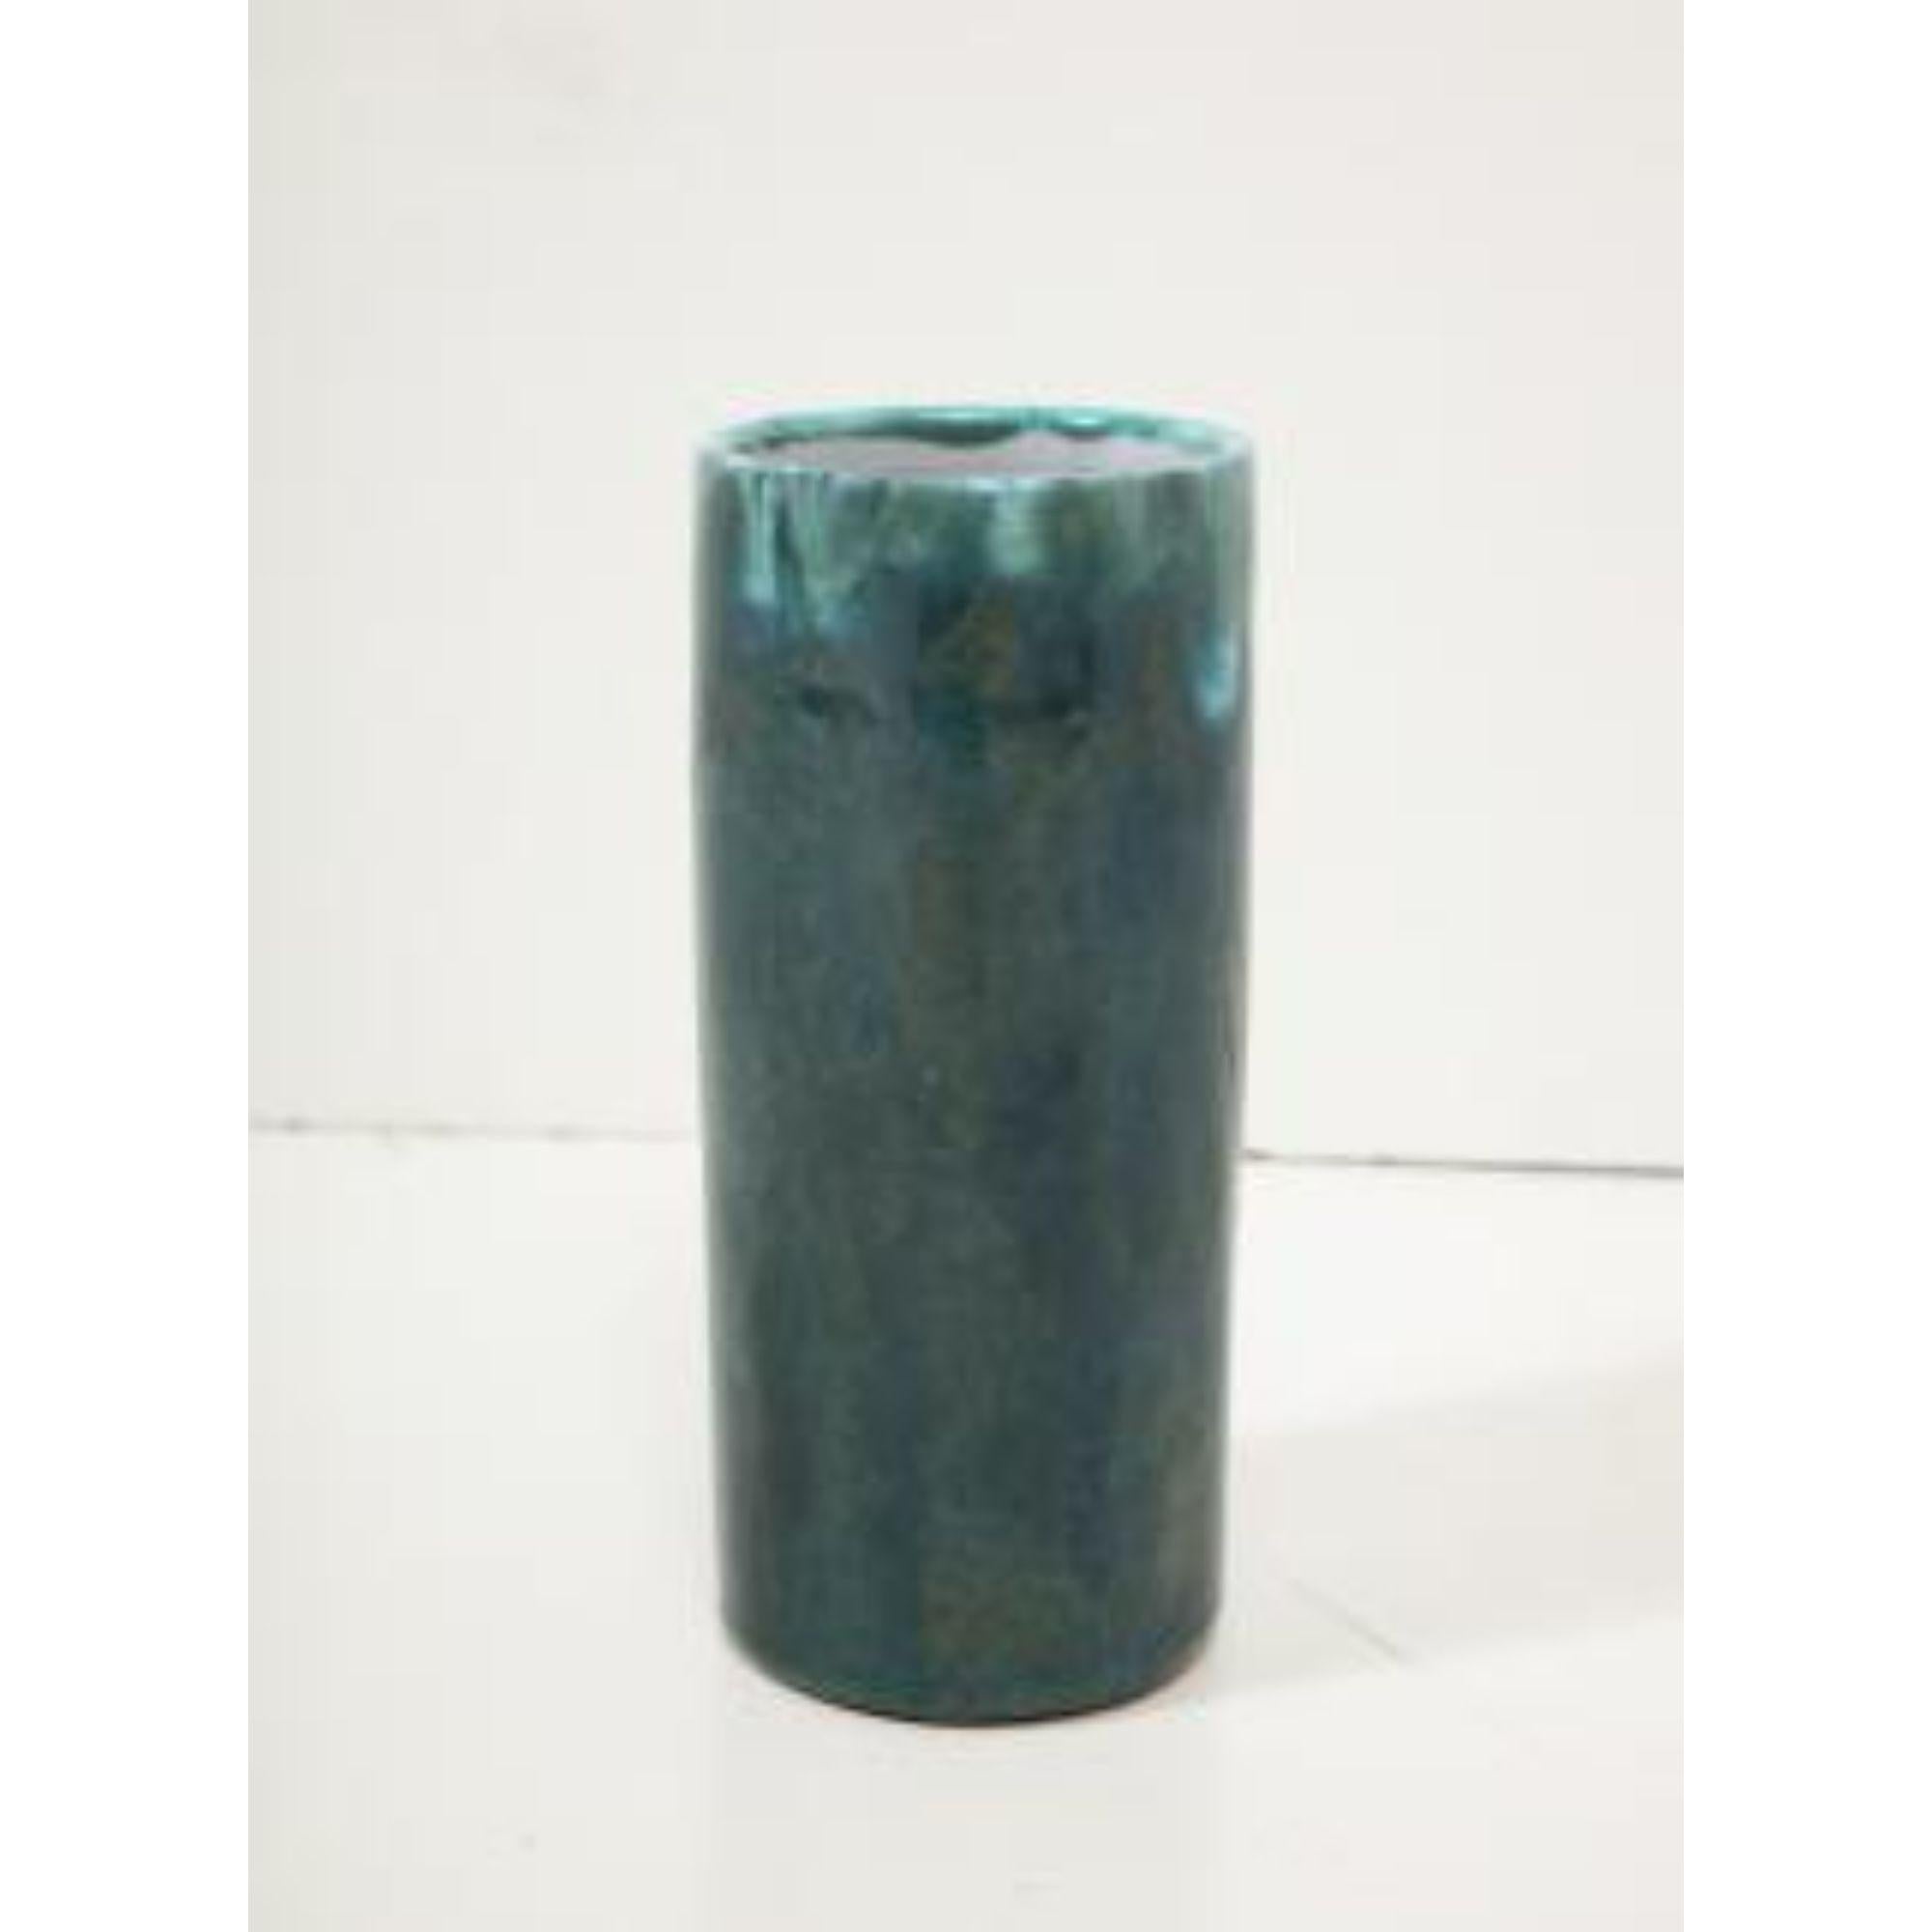 20th Century Cylindrical Green Glazed Ceramic Studio Vase, Biot, France, c. 1950 For Sale